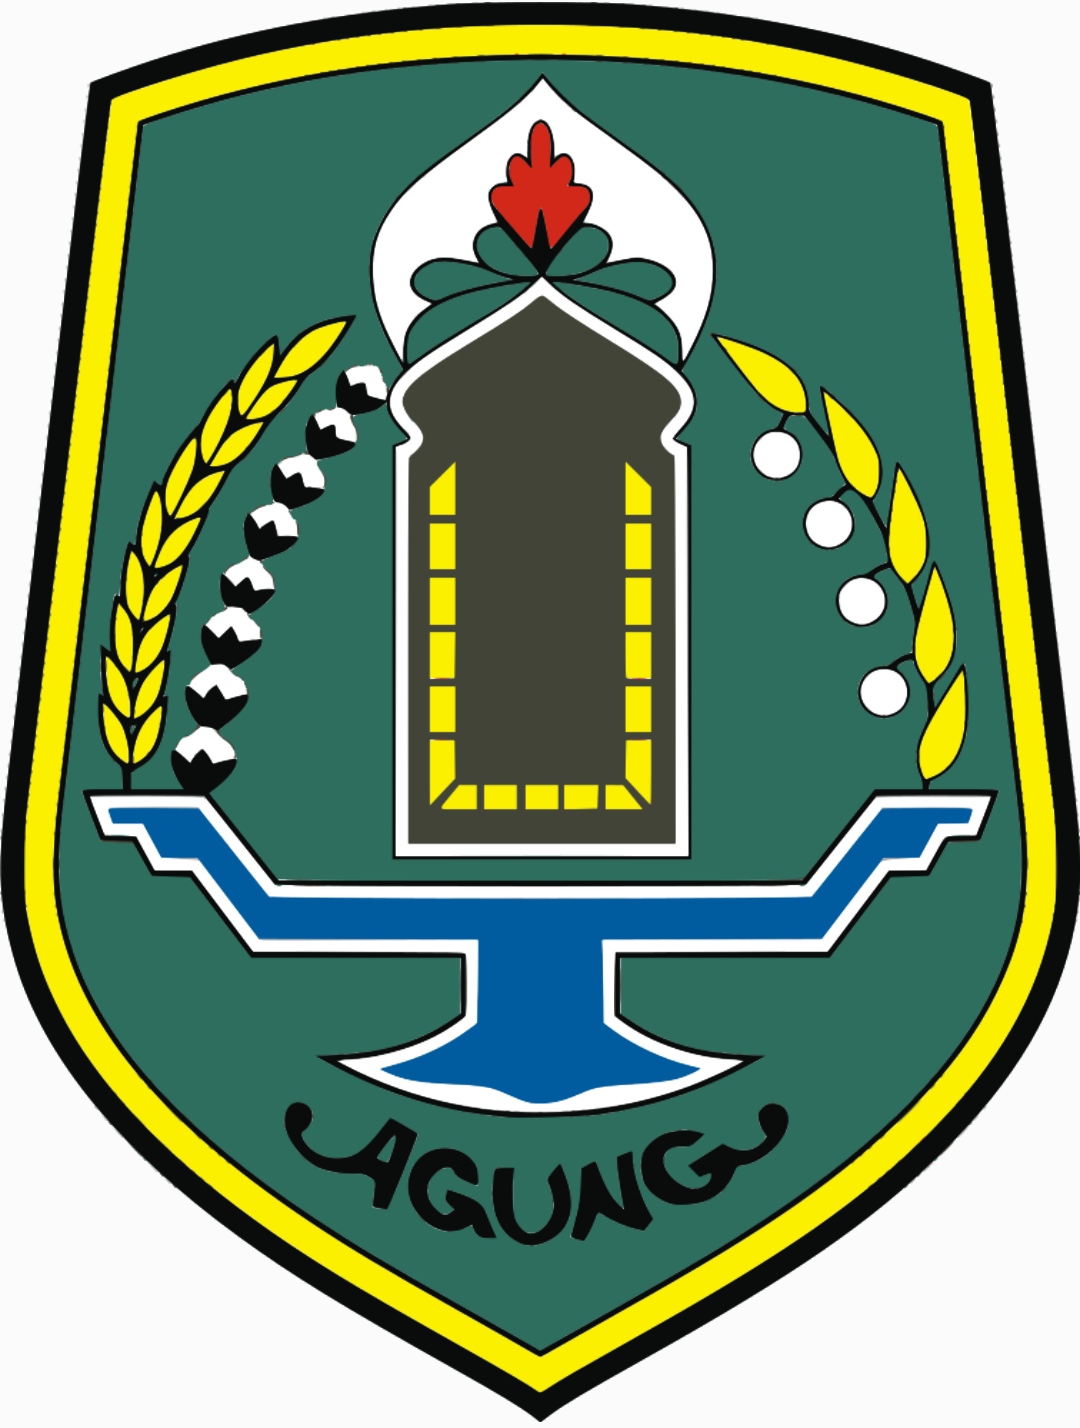 Logo Kabupaten Hulu Sungai Utara